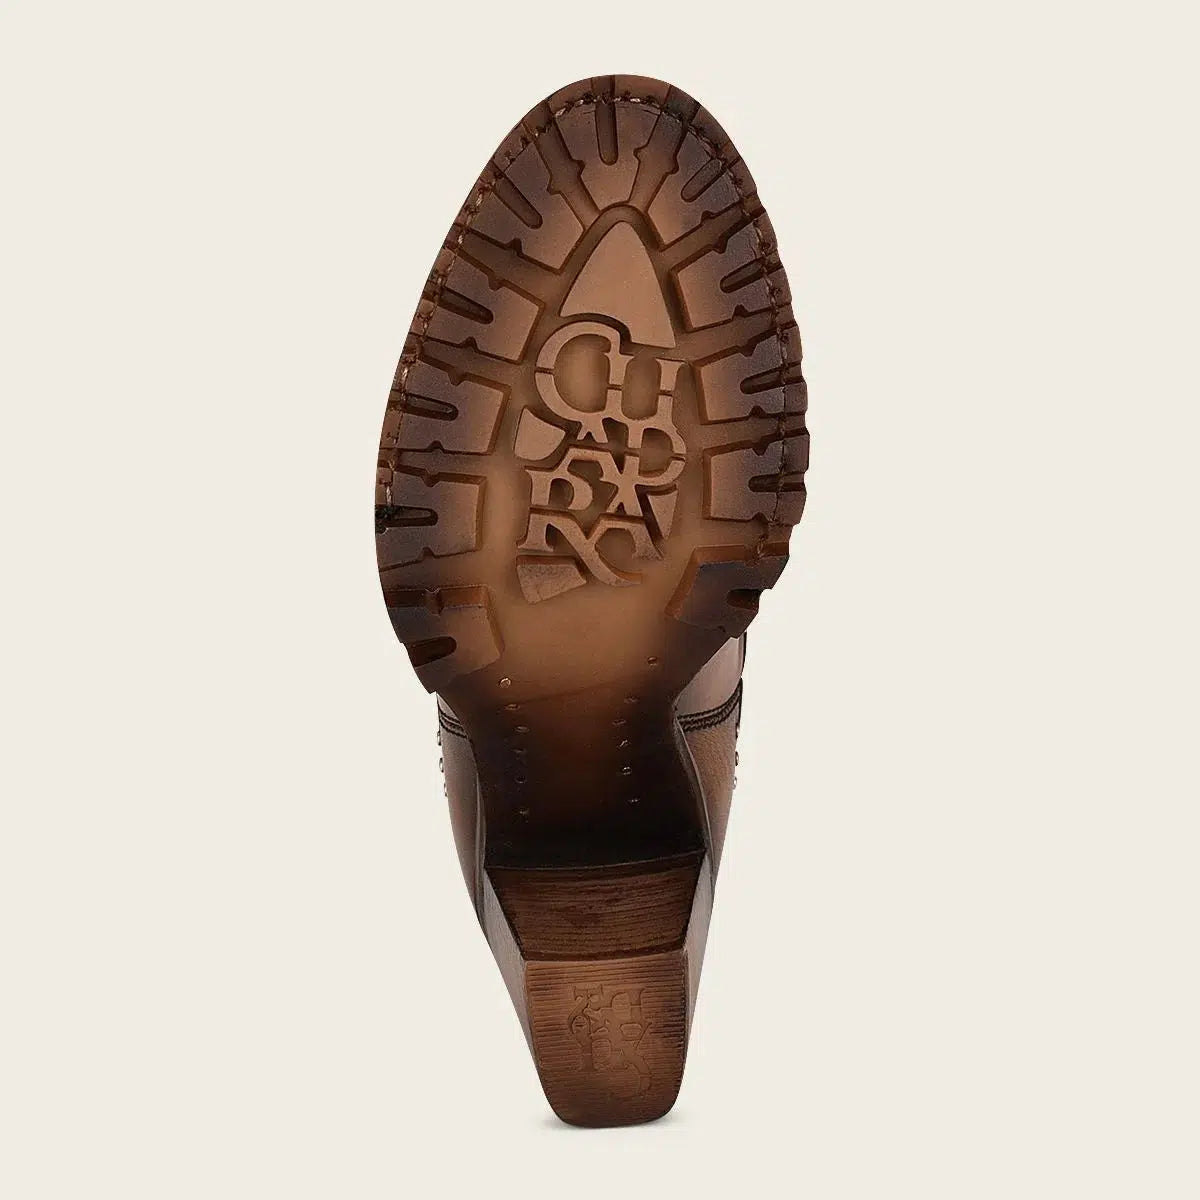 4N01RS - Cuadra sand fashion cowboy leather ankle boots for women-CUADRA-Kuet-Cuadra-Boots